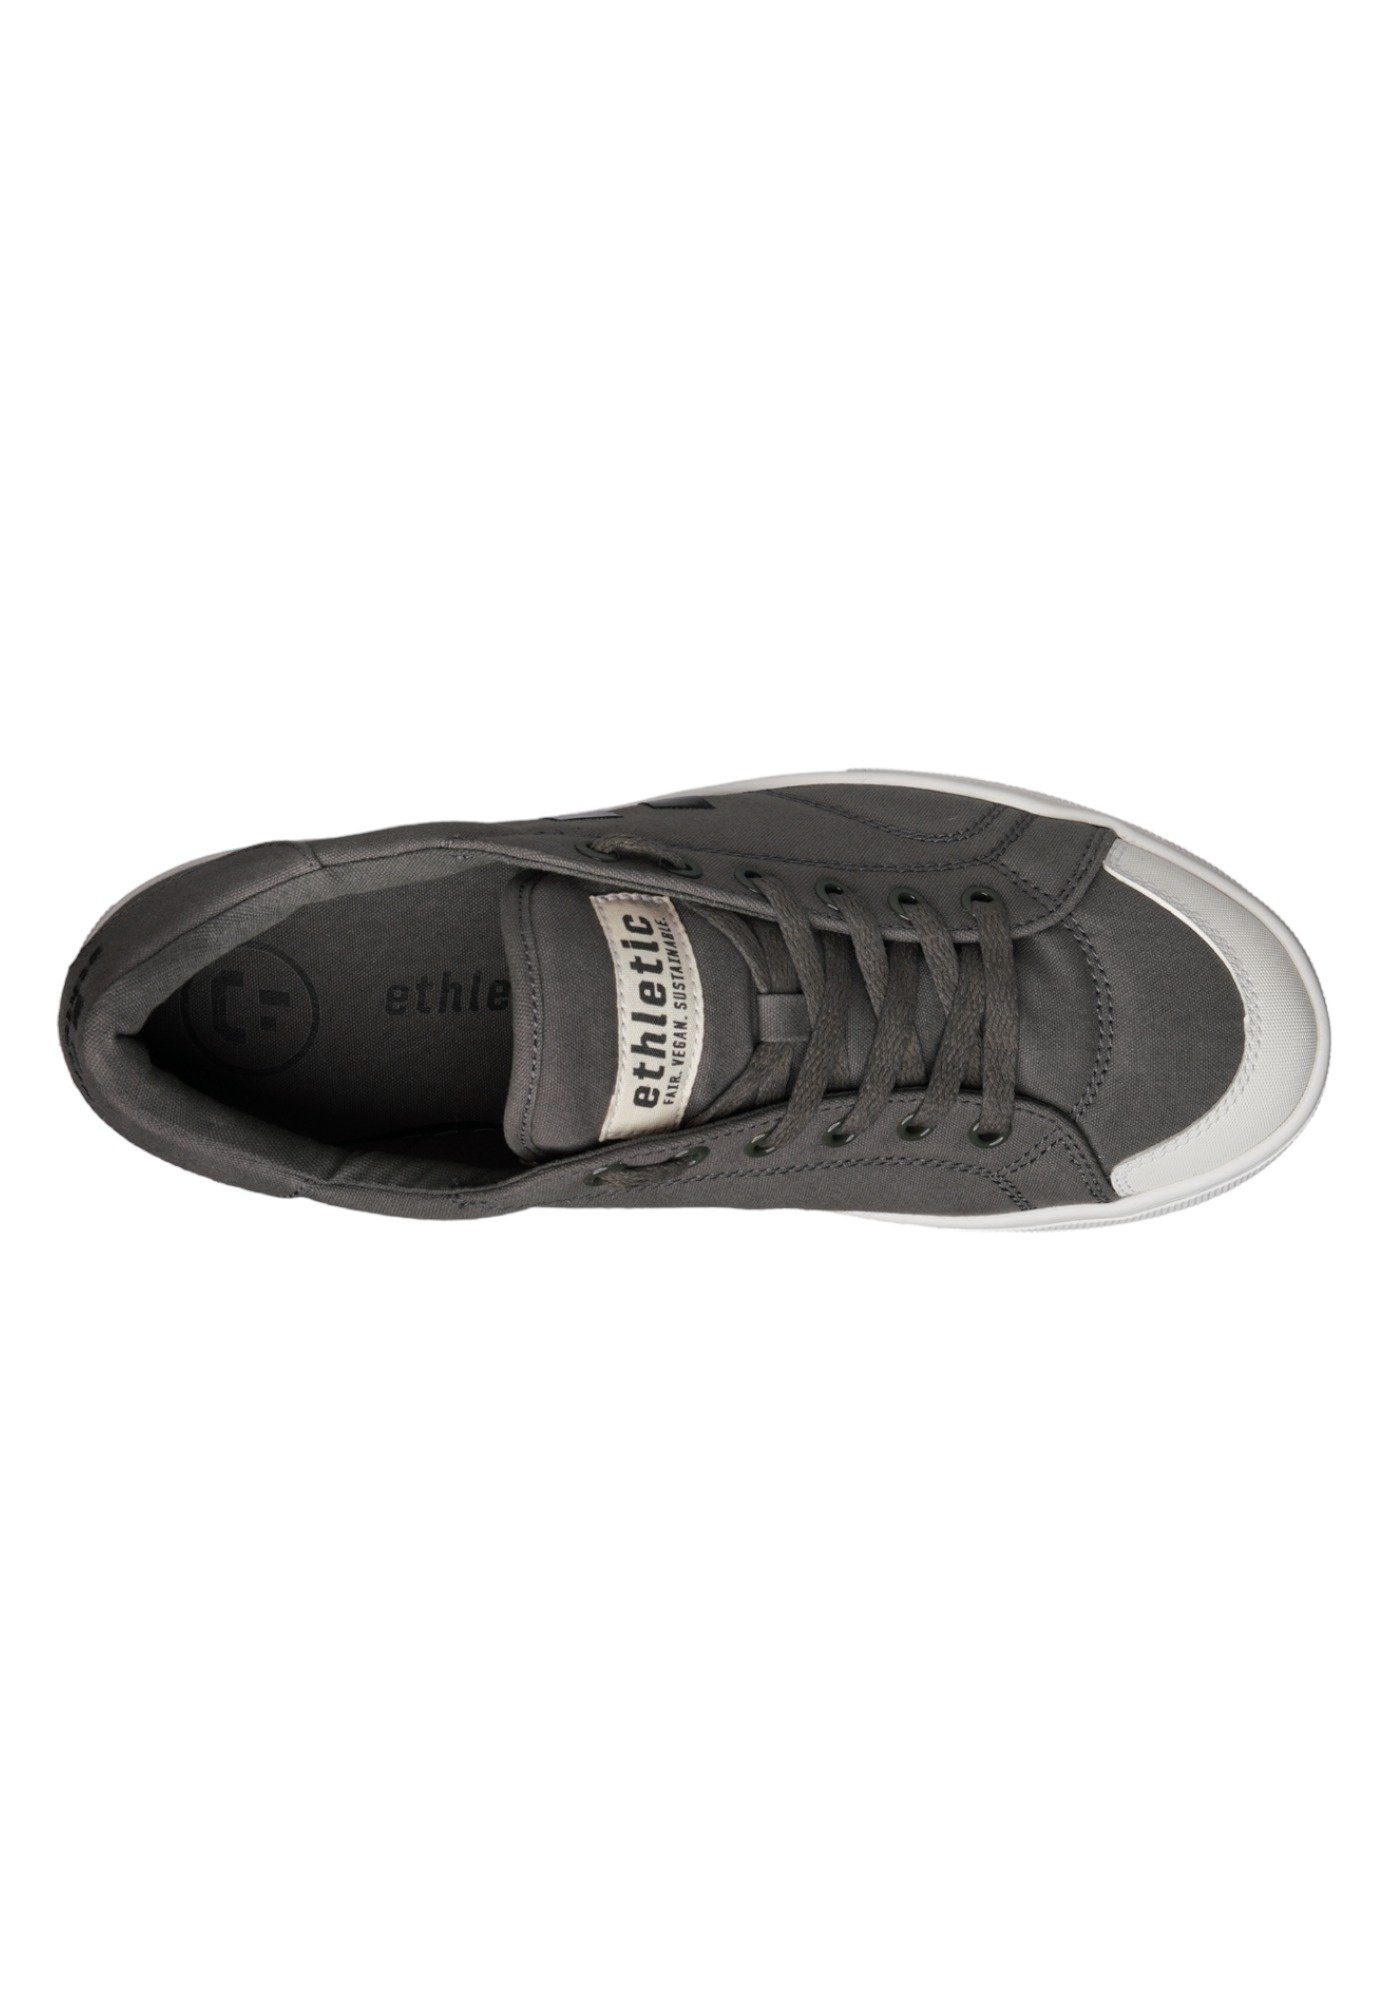 Black Sneaker Cut Lo Produkt Donkey ETHLETIC Active - Jet Grey Fairtrade